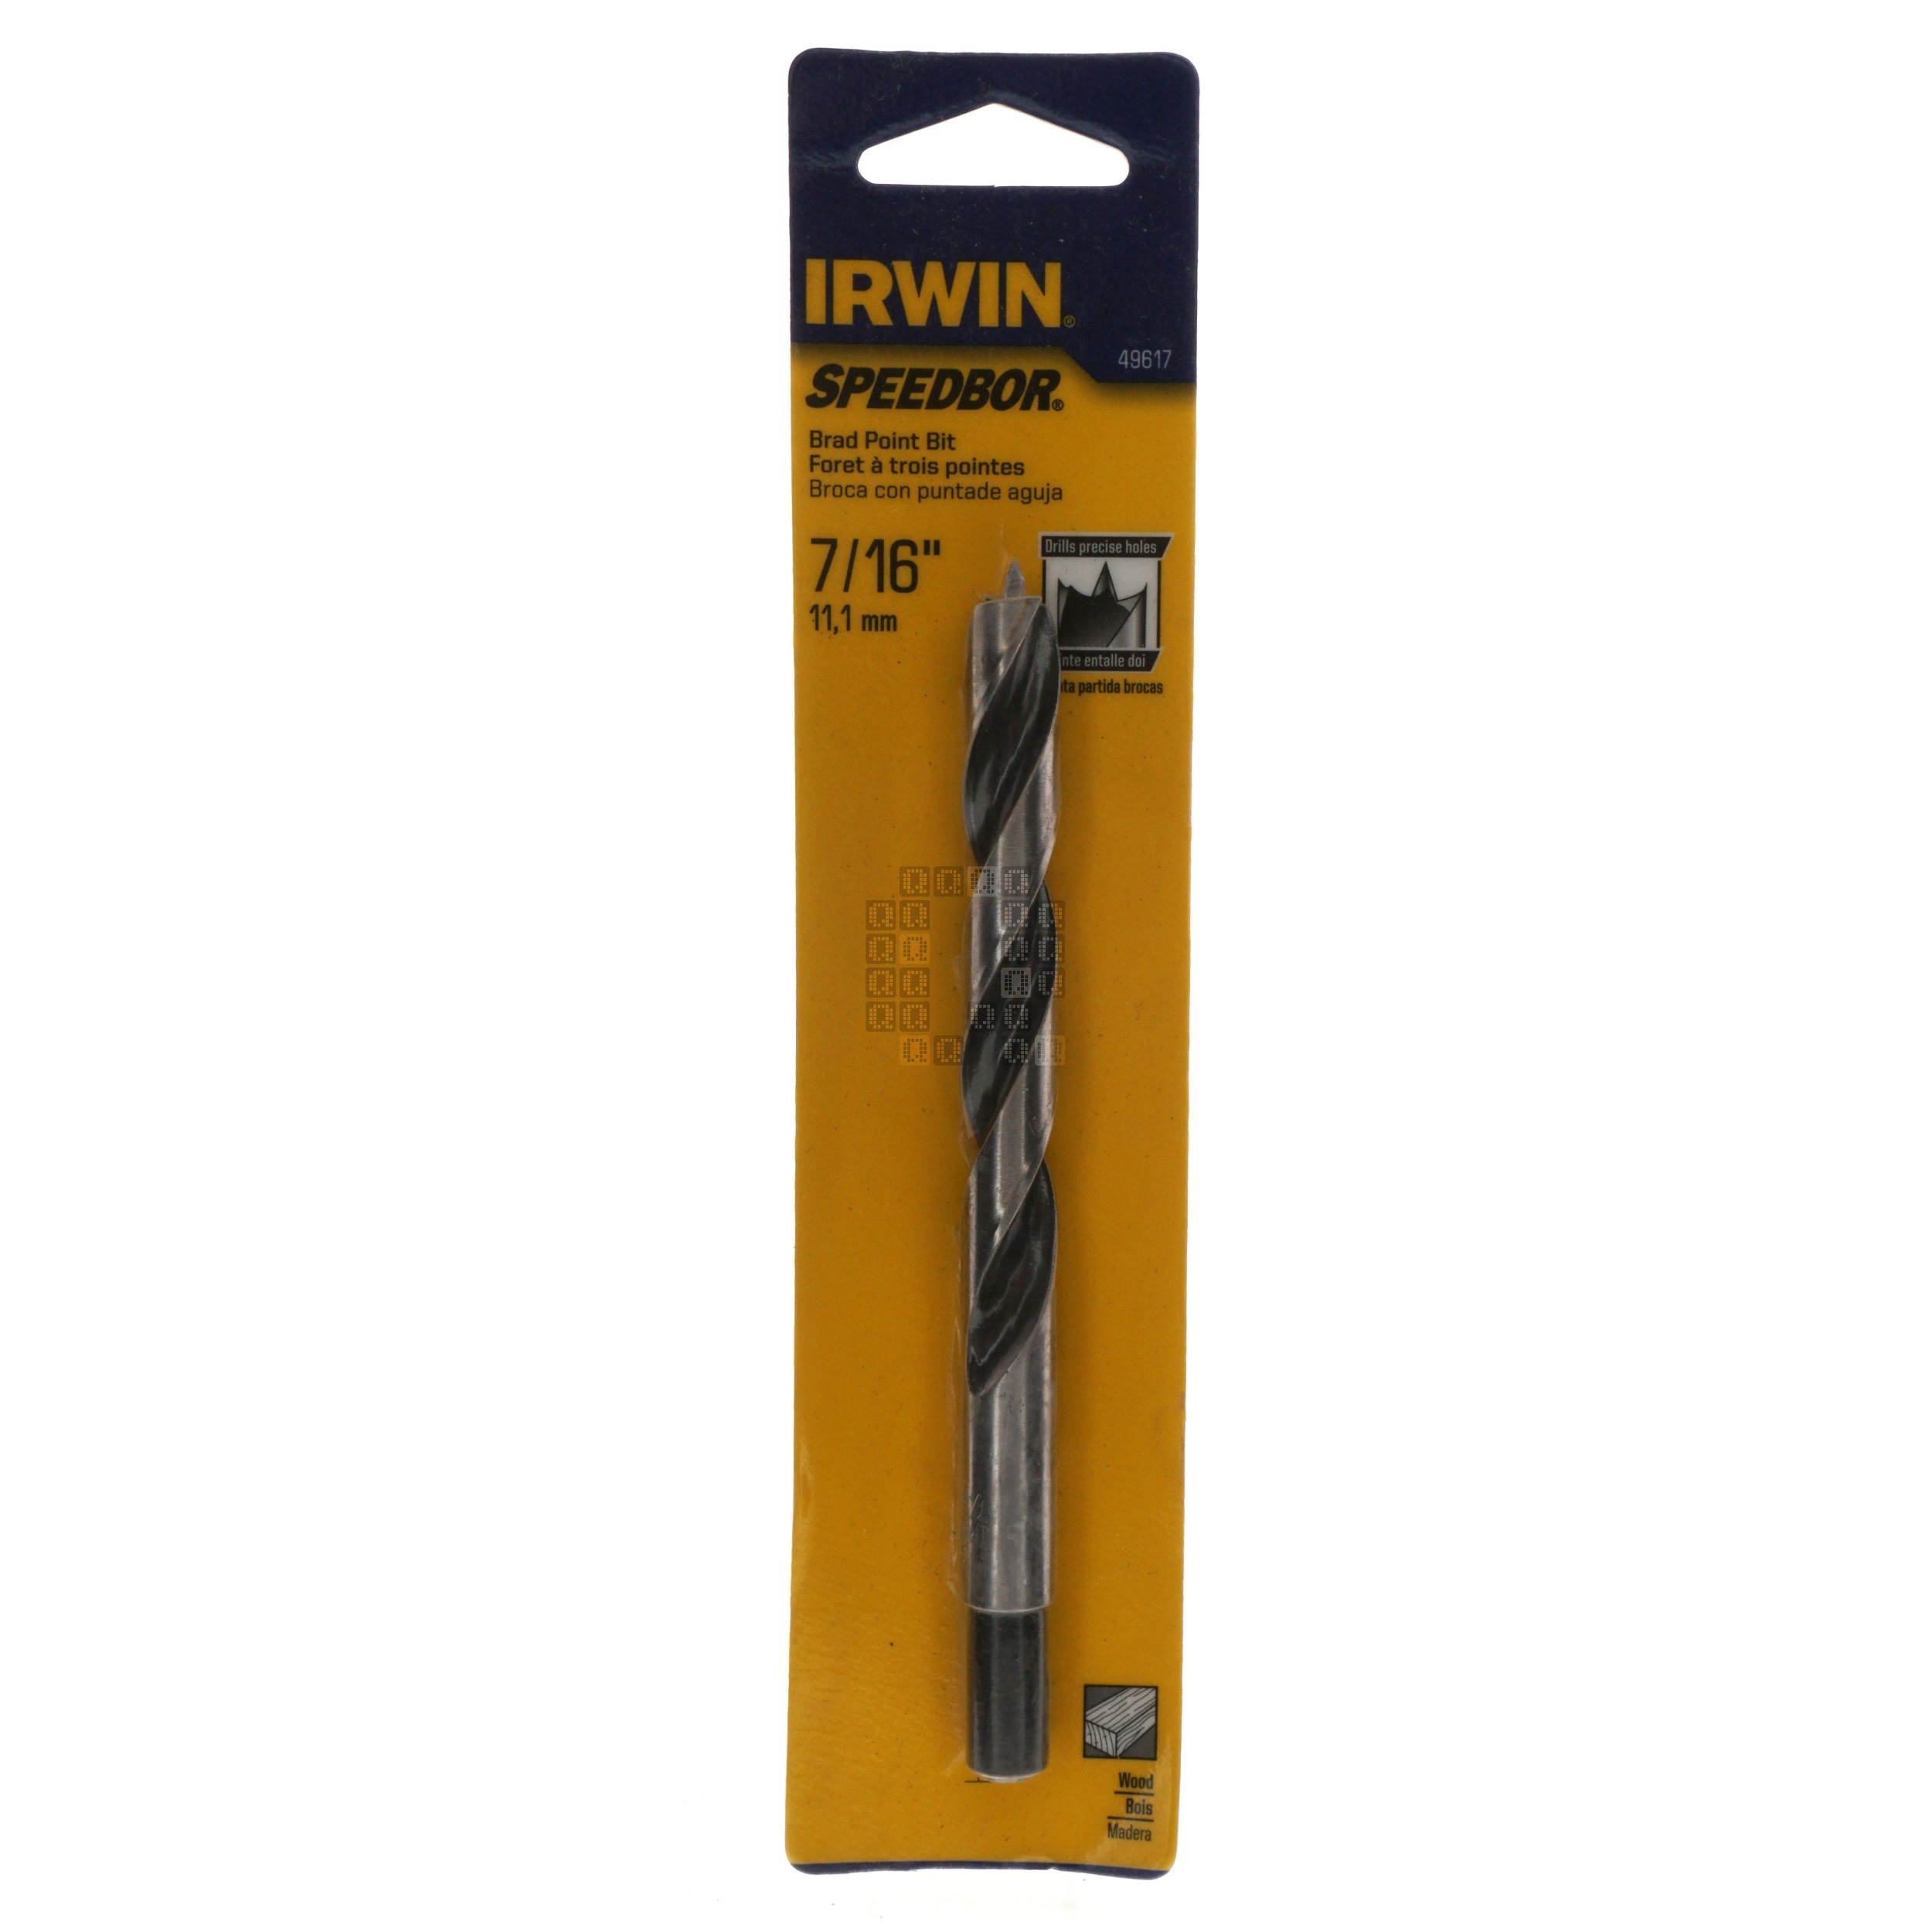 Irwin Tools 49617 7/16" SPEEDBOR Brad Point Drill Bit, 3/8" Reduced Shank